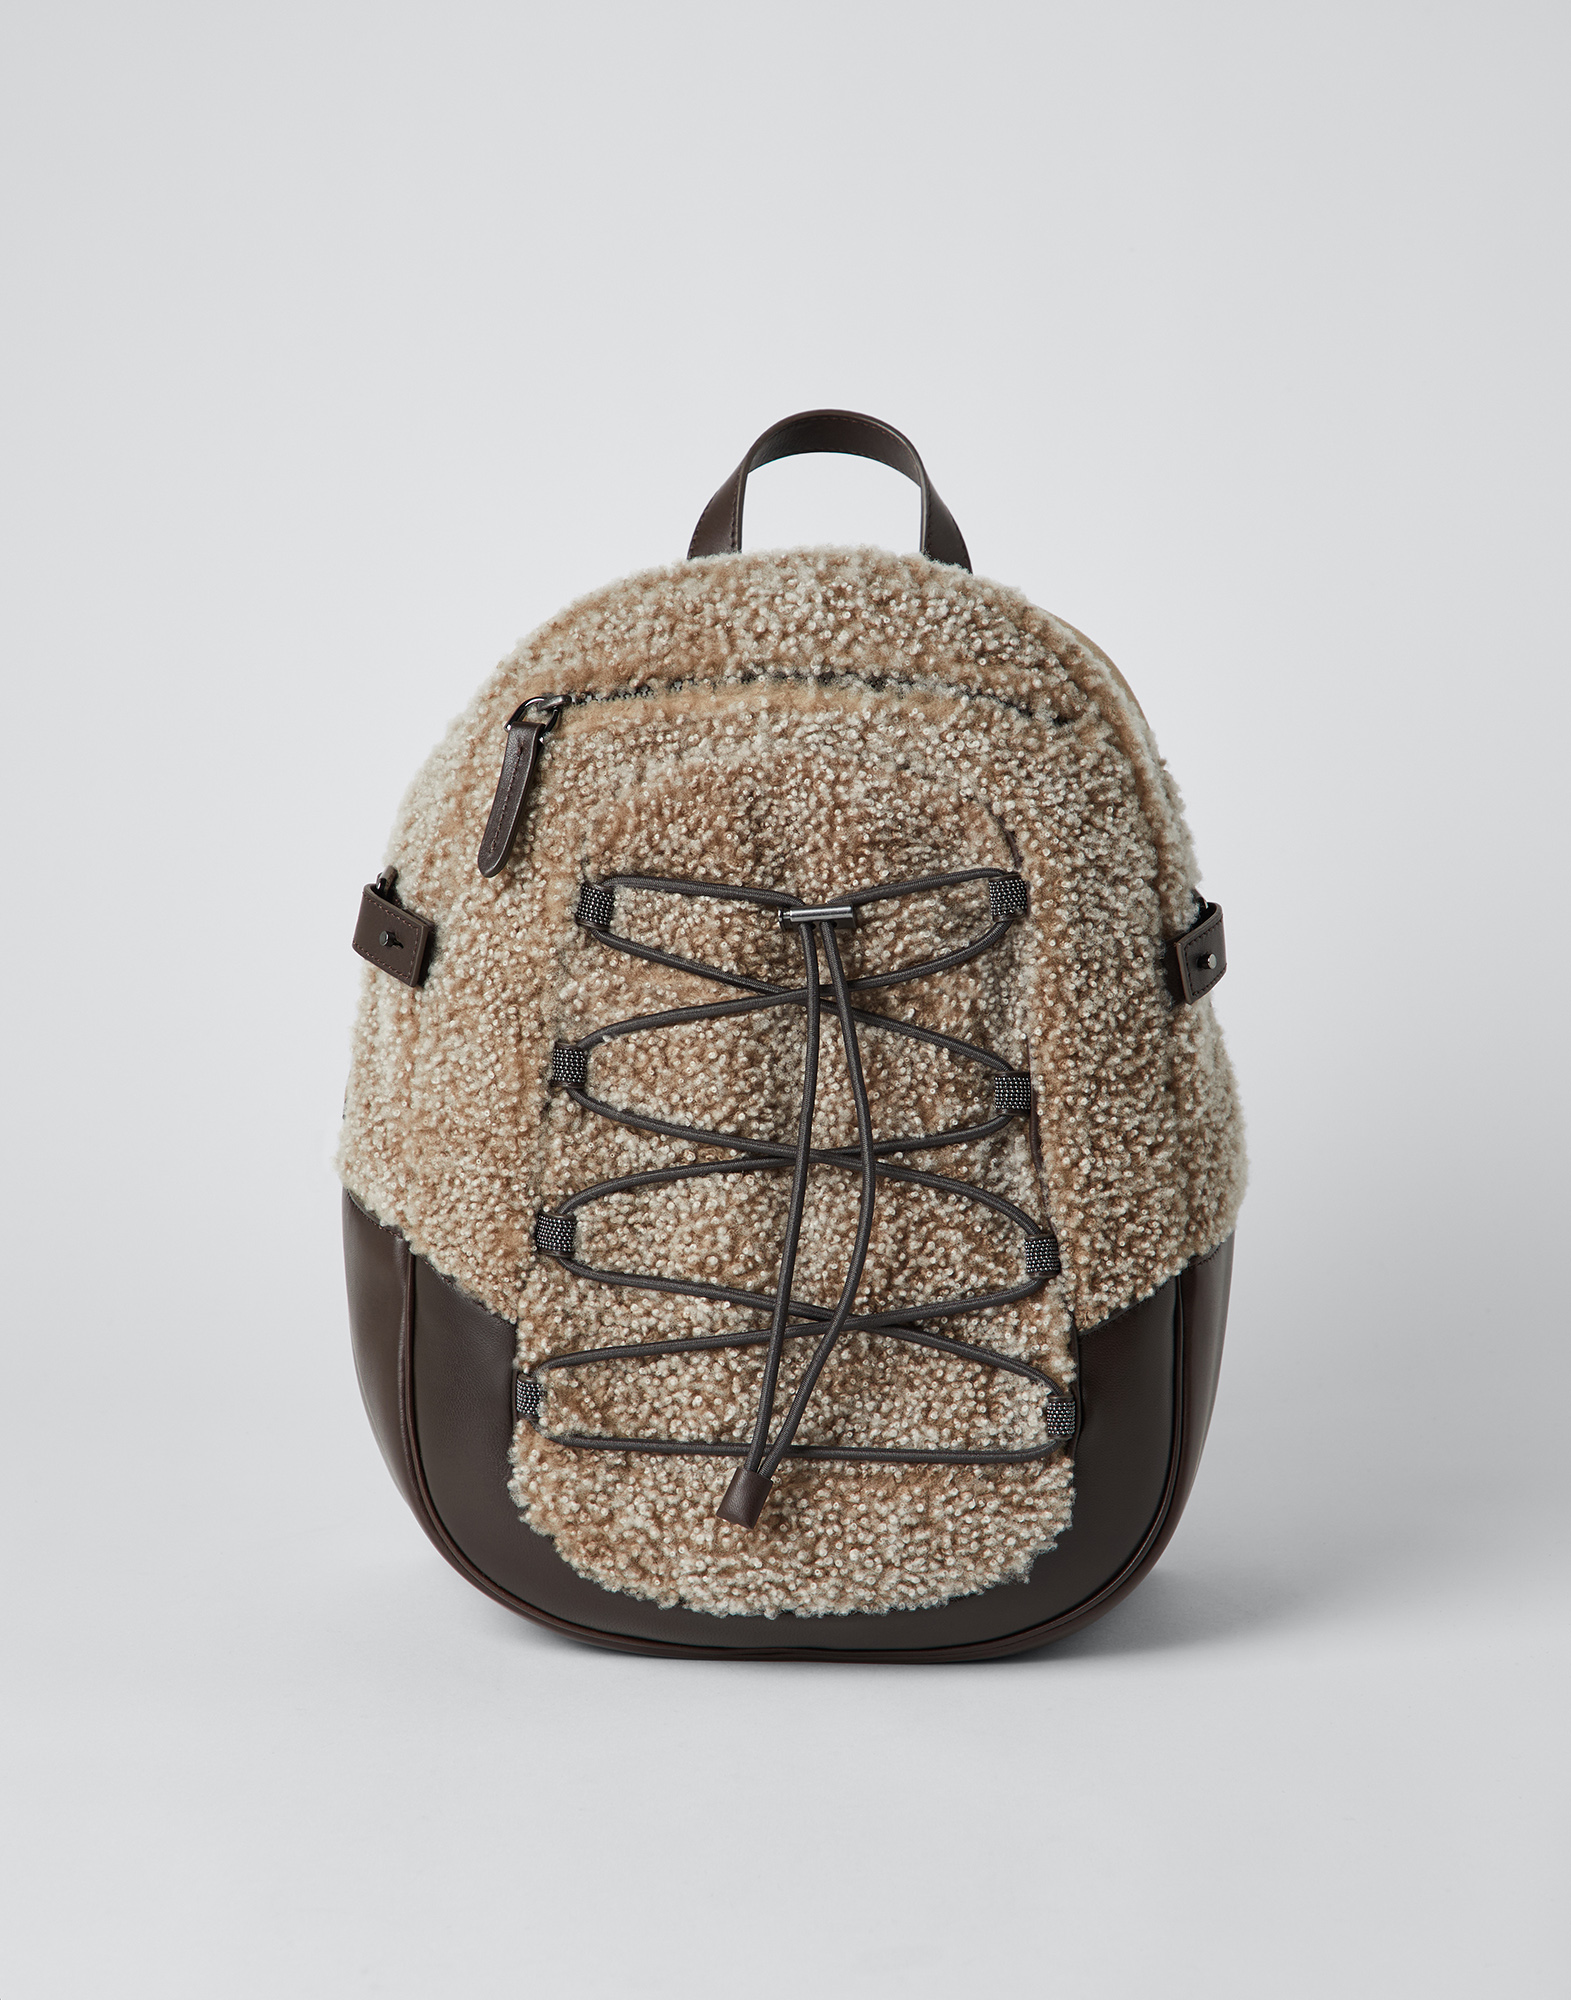 Backpack with monili